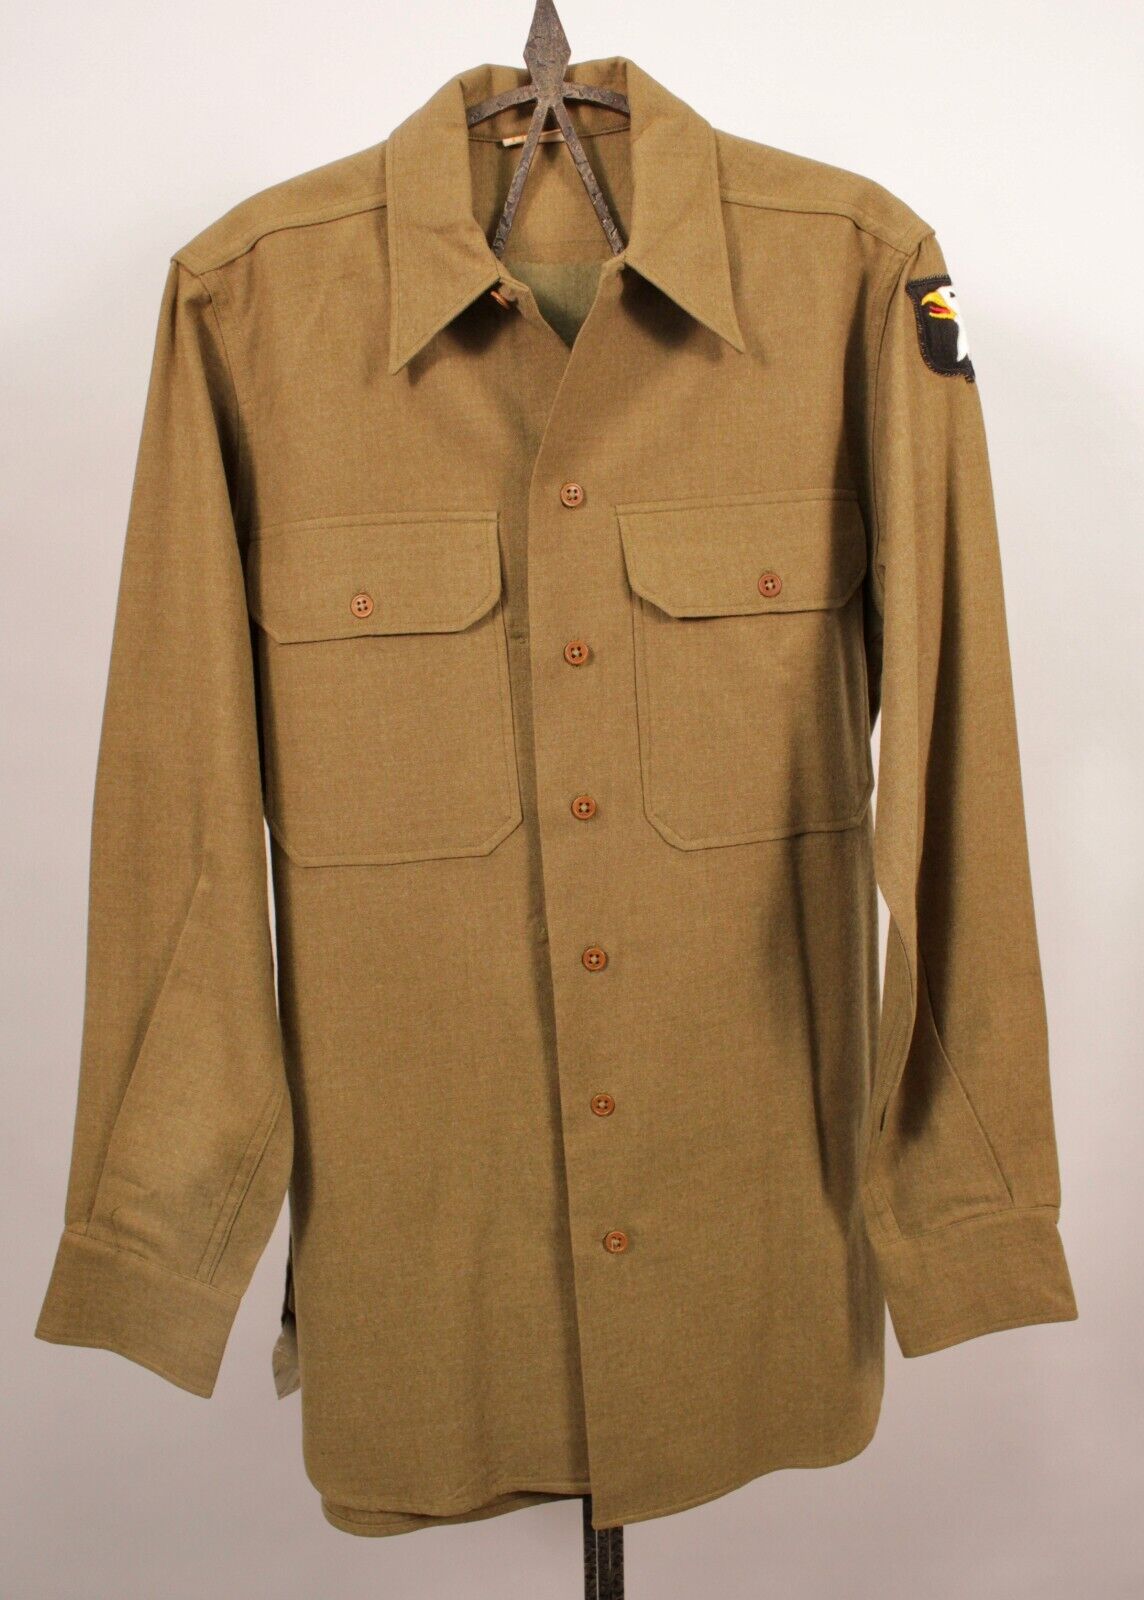 VTG 1940s WW2 US Army Airborne Paratrooper Wool Uniform Shirt w Patch S WWII 40s